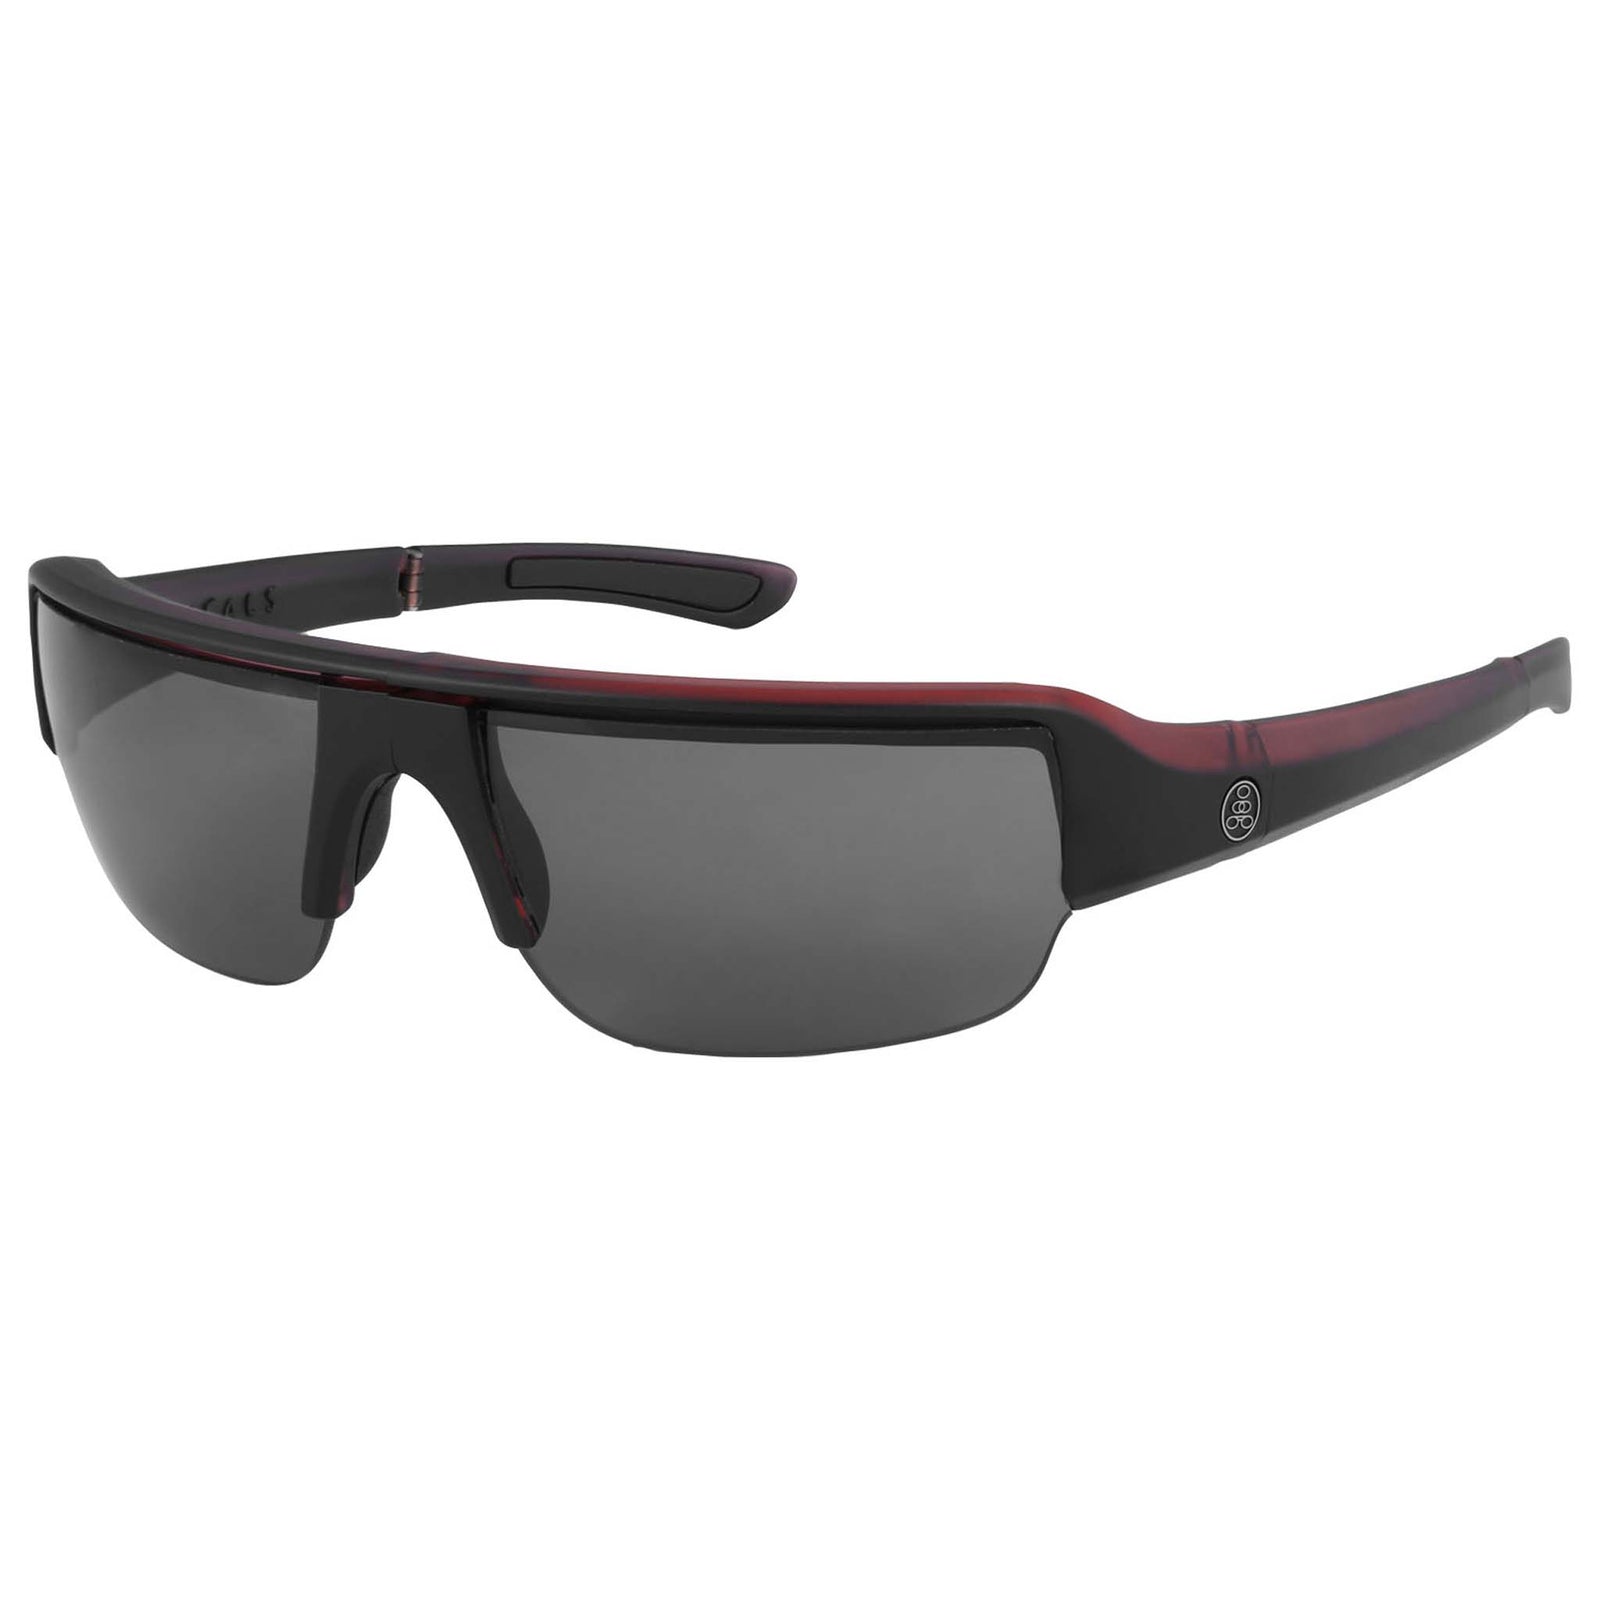 Popticals, Premium Compact Sunglasses, PopGun, 030010-REGP, Polarized Sunglasses, Matte Red/Black Crystal Frame, Gray Lenses, Glam View